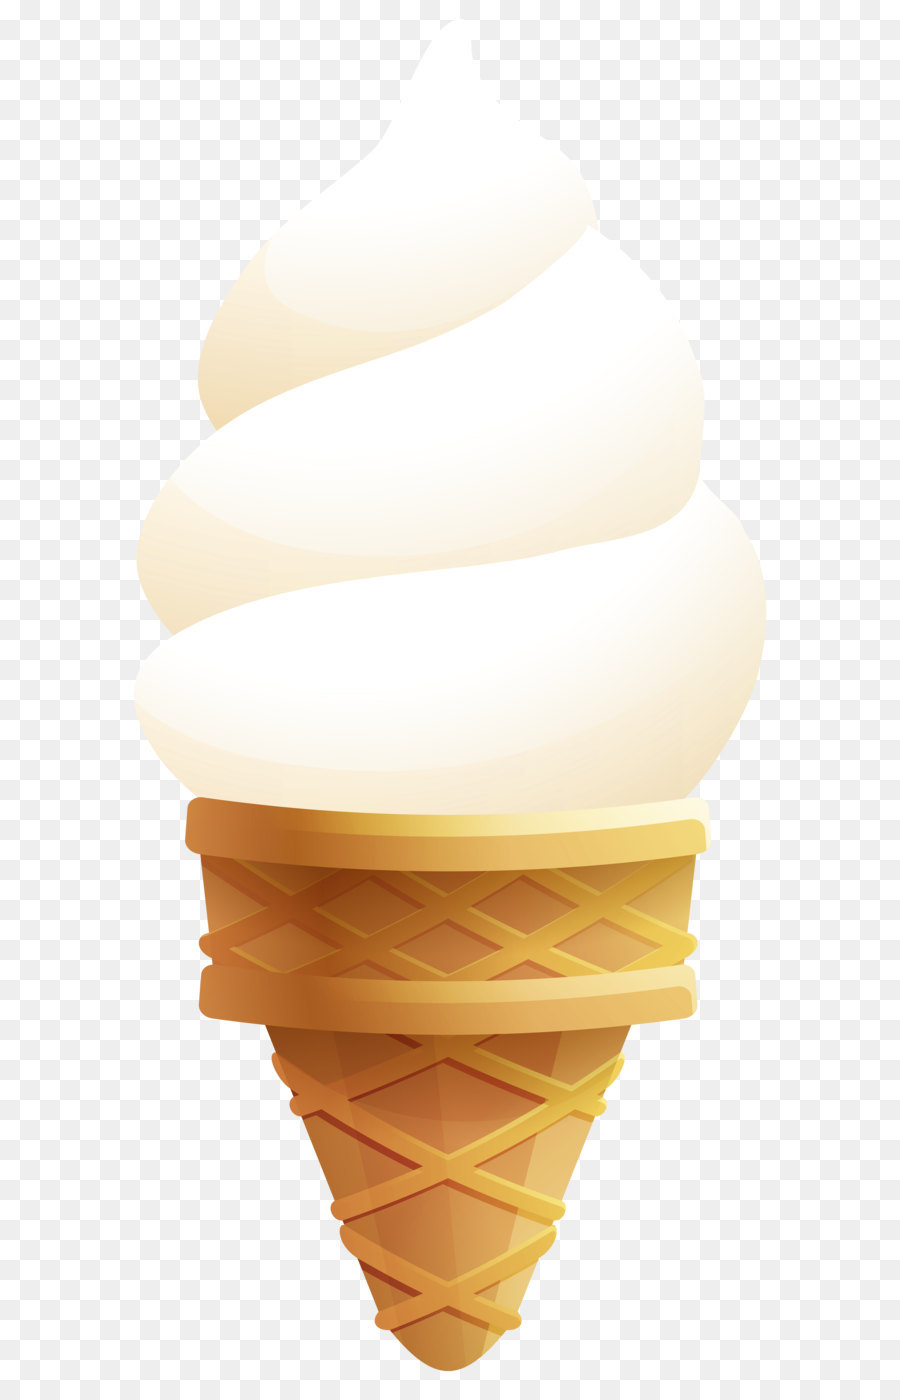 Ice cream cone Food - Ice Cream Transparent Clip Art Image png download - 3273*7000 - Free Transparent Ice Cream png Download.